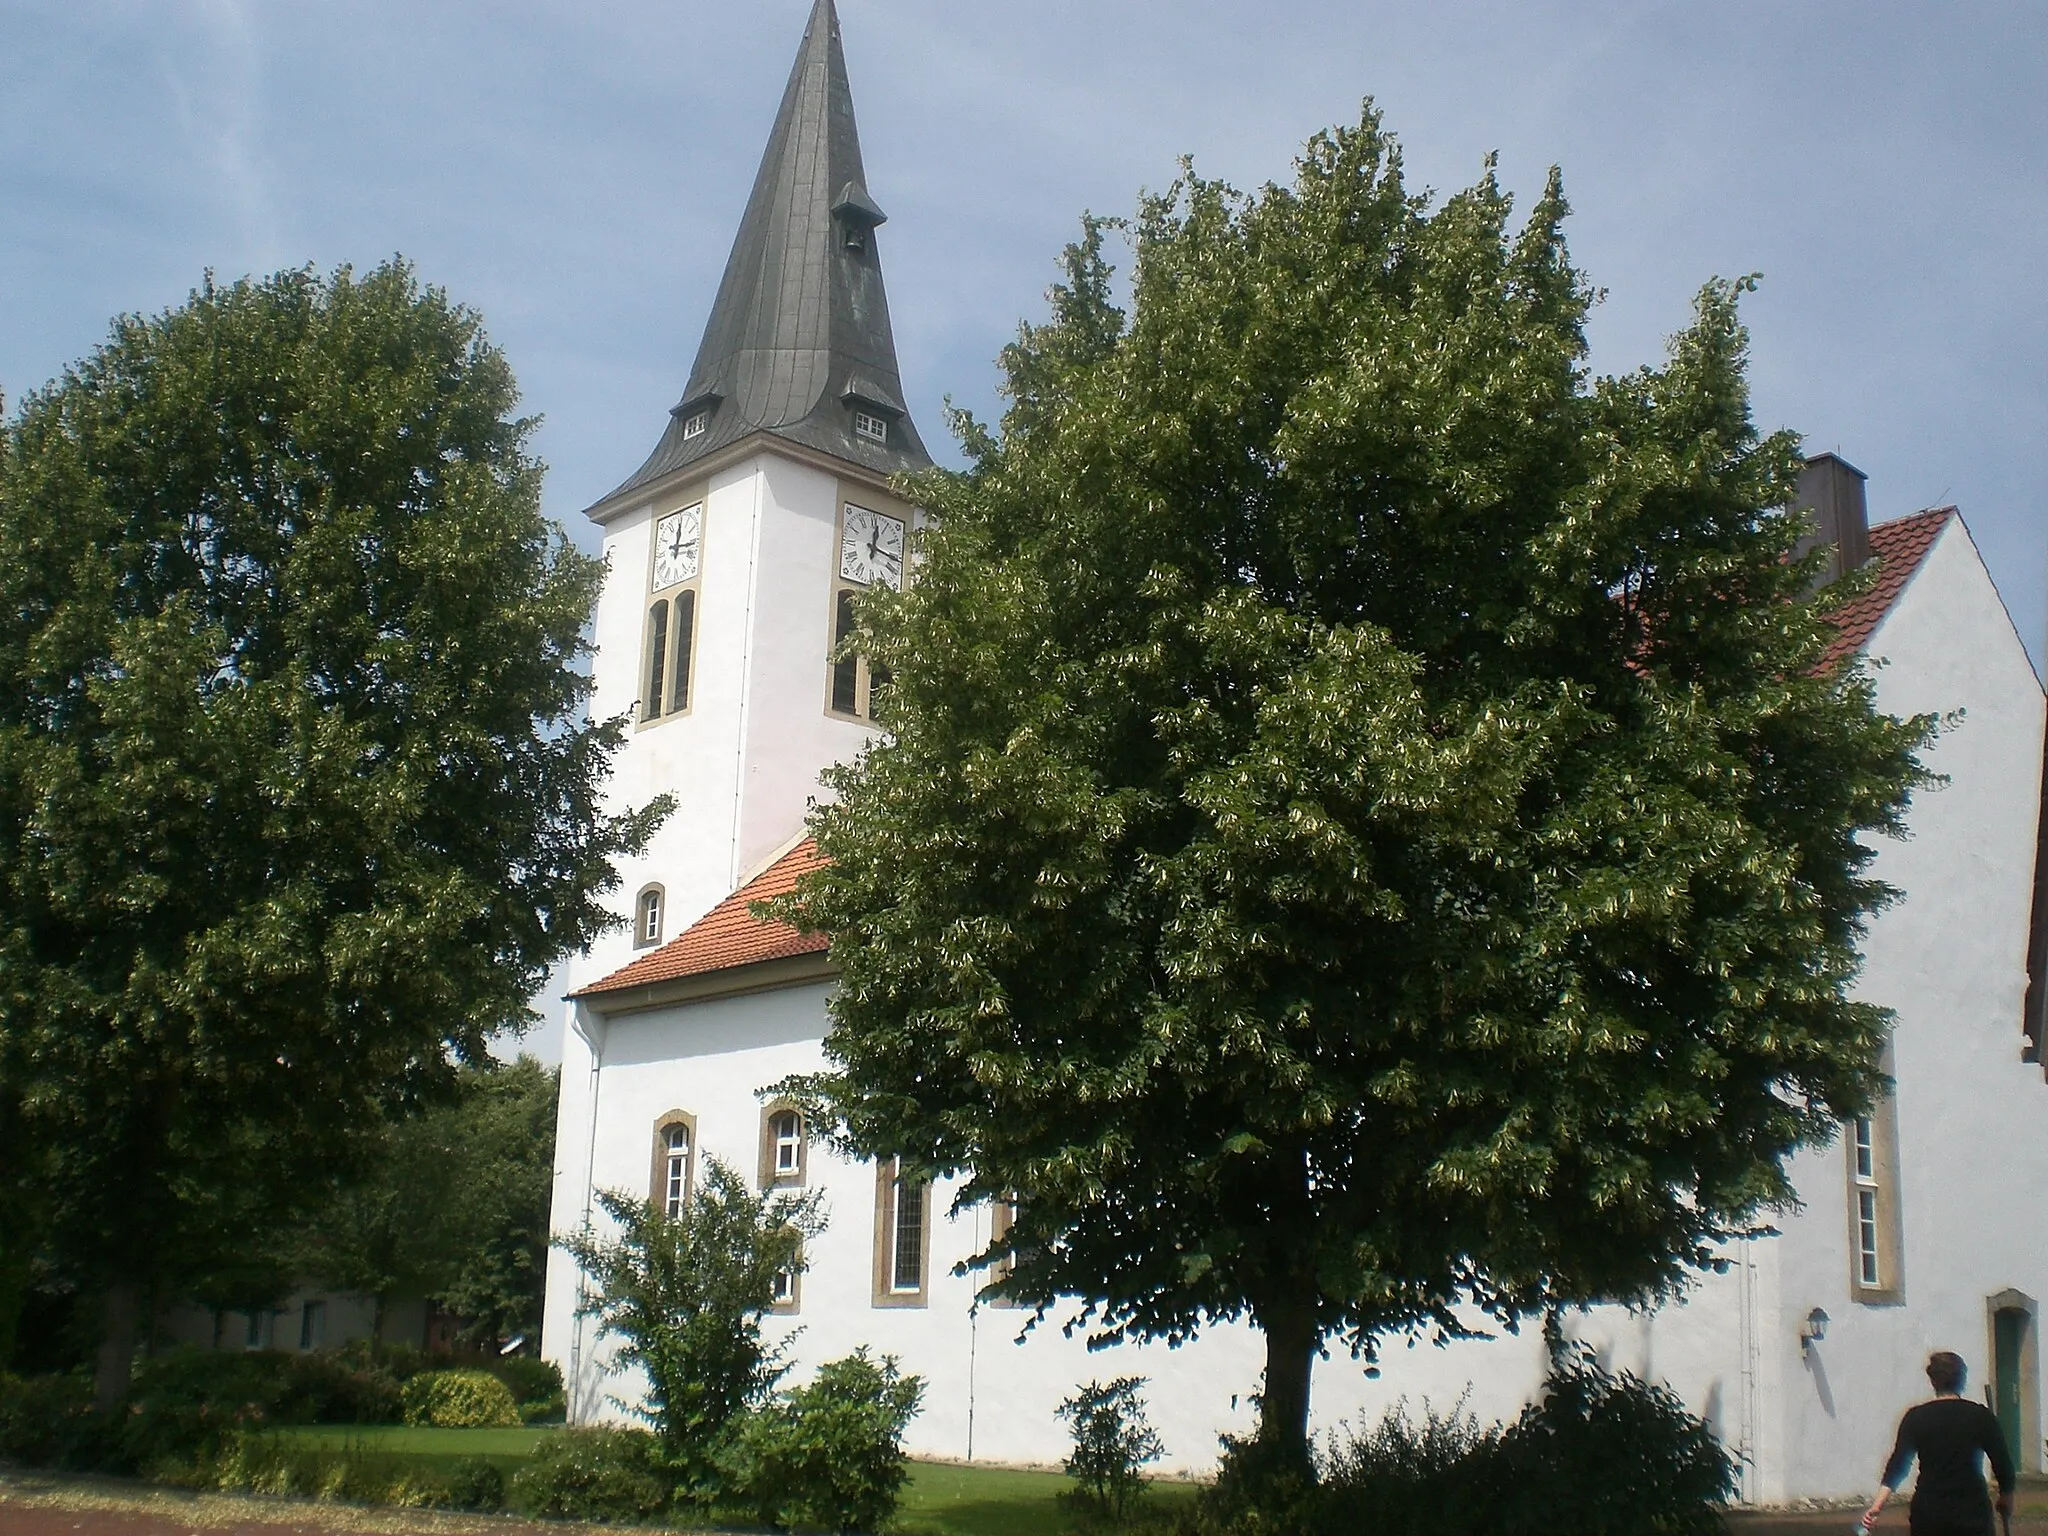 Photo showing: The lutheran church in Vörden, Neuenkirchen-Vörden, Lower Saxony, Germany